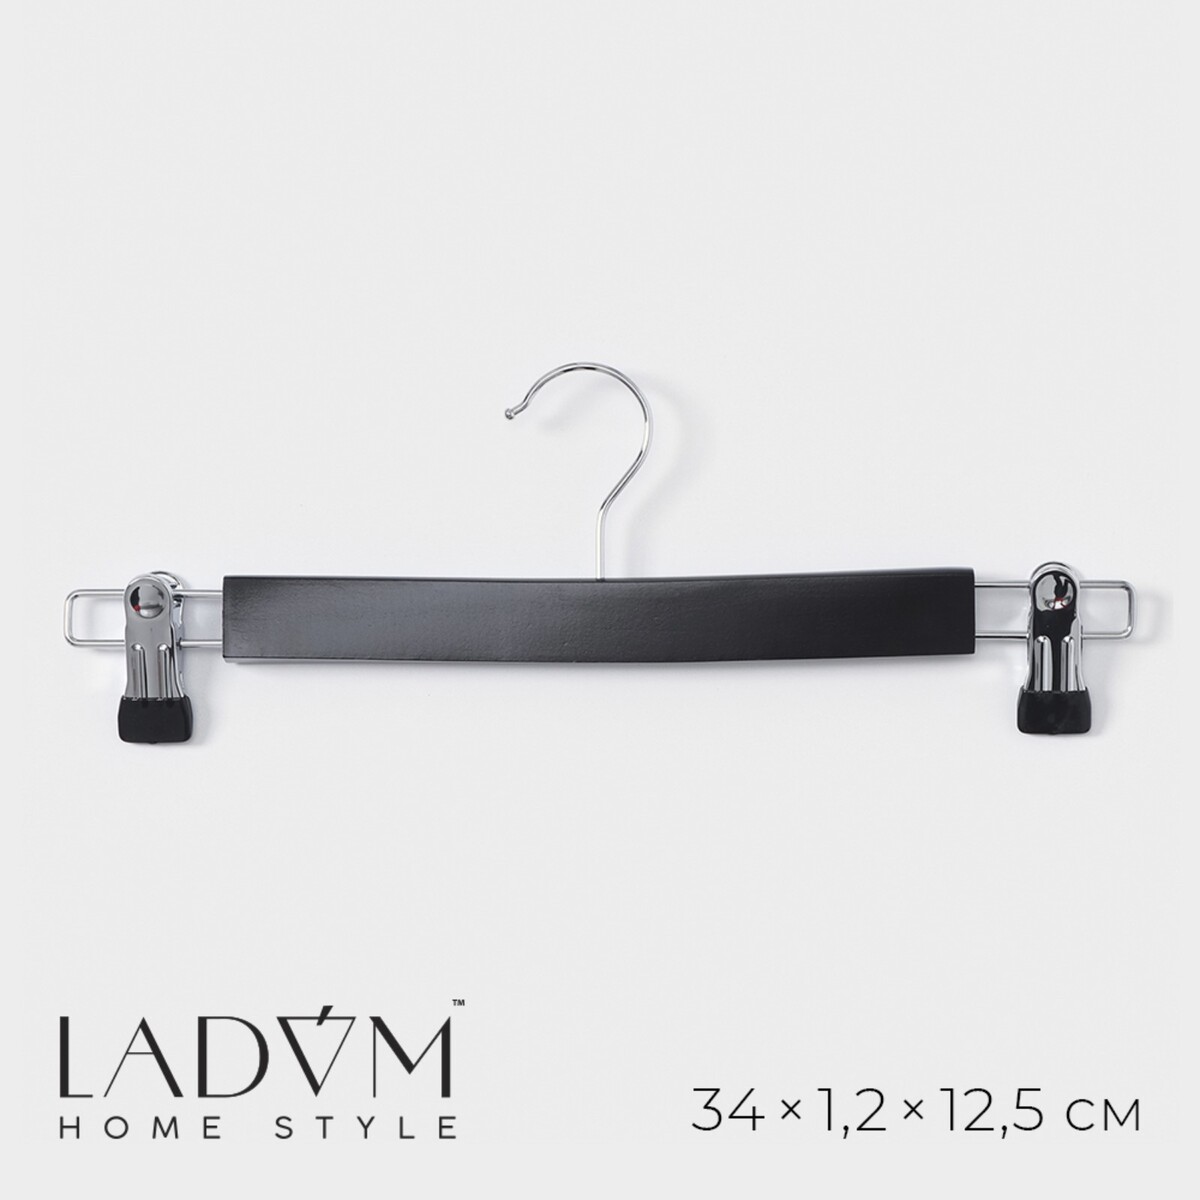 Вешалка для брюк и юбок с зажимами ladо́m bois, 34×1,2×12,5 см, сорт а, цвет темное дерево bradex вешалка для брюк 5 в1 гинго